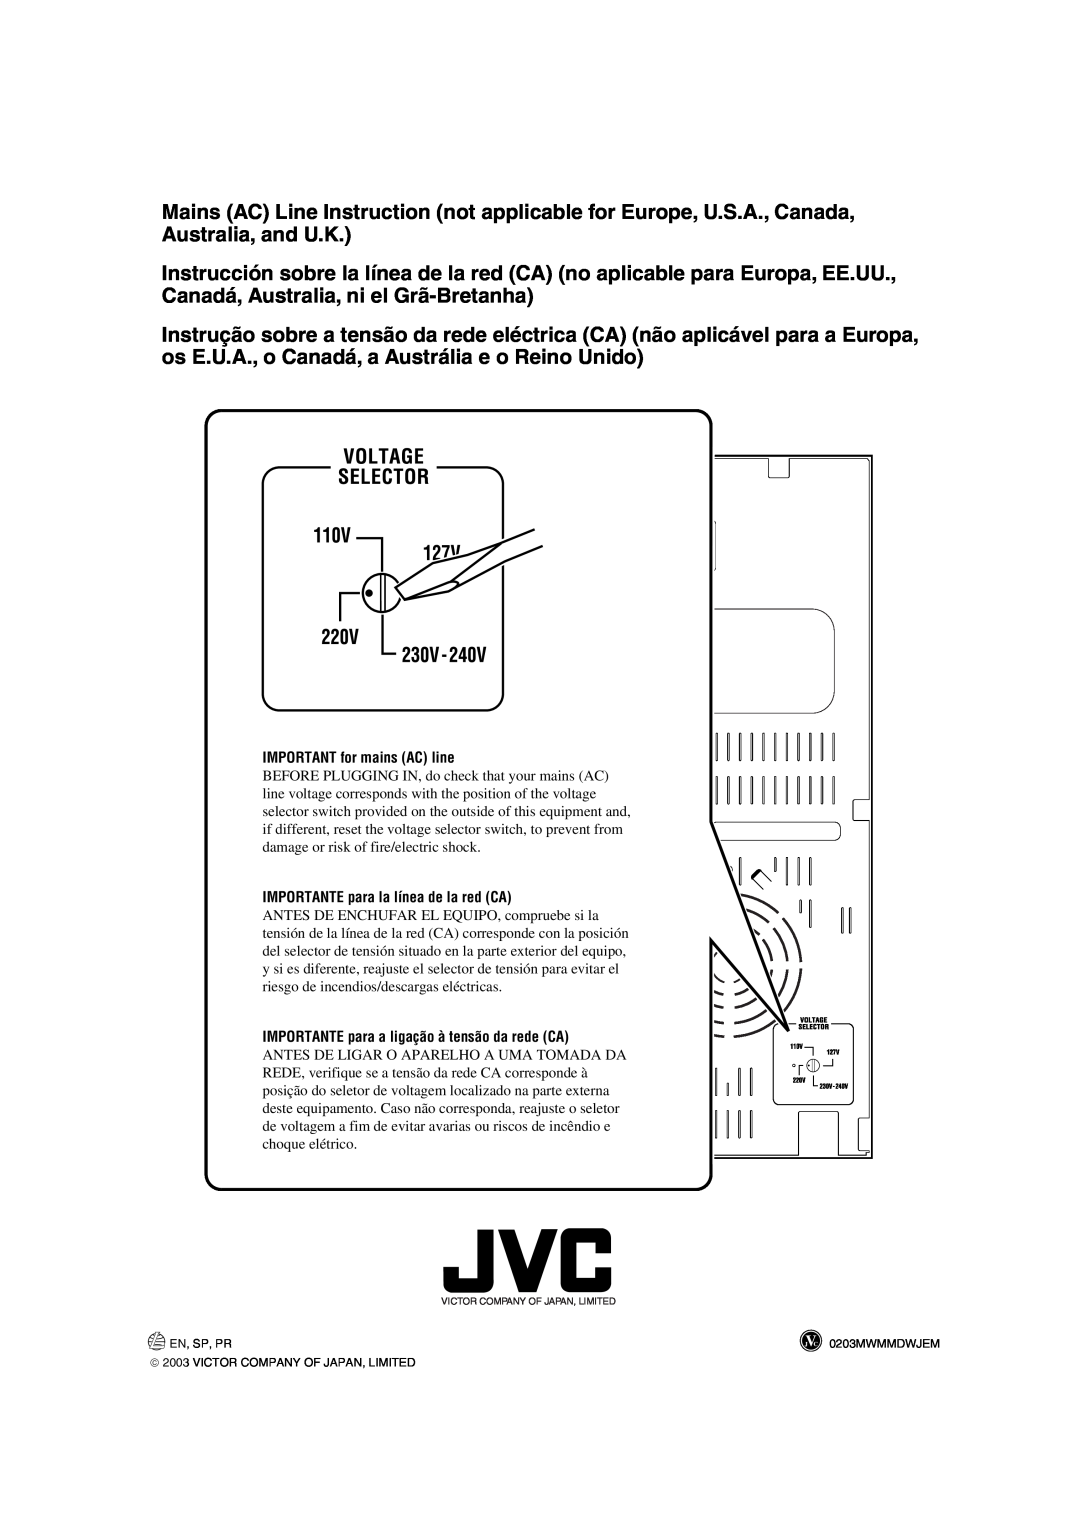 JVC CA-HXZ9 manual IMPORTANT for mains AC line, IMPORTANTE para la línea de la red CA, En, Sp, Pr, 0203MWMMDWJEM 